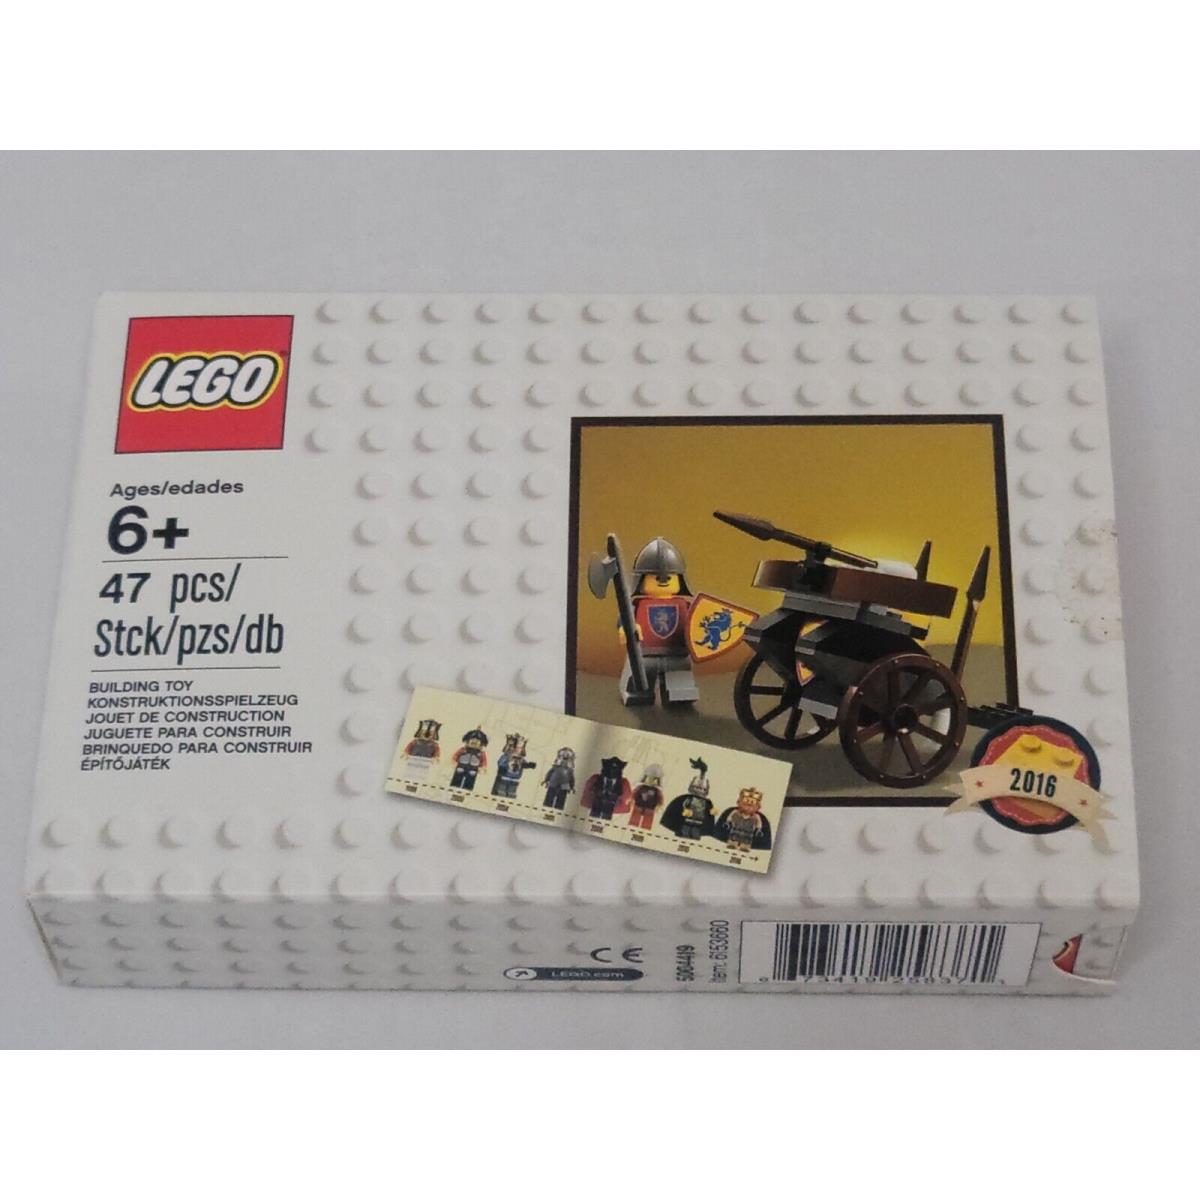 Lego 5004419 Classic Knights Minifigure Store Exclusive Castle Ballista